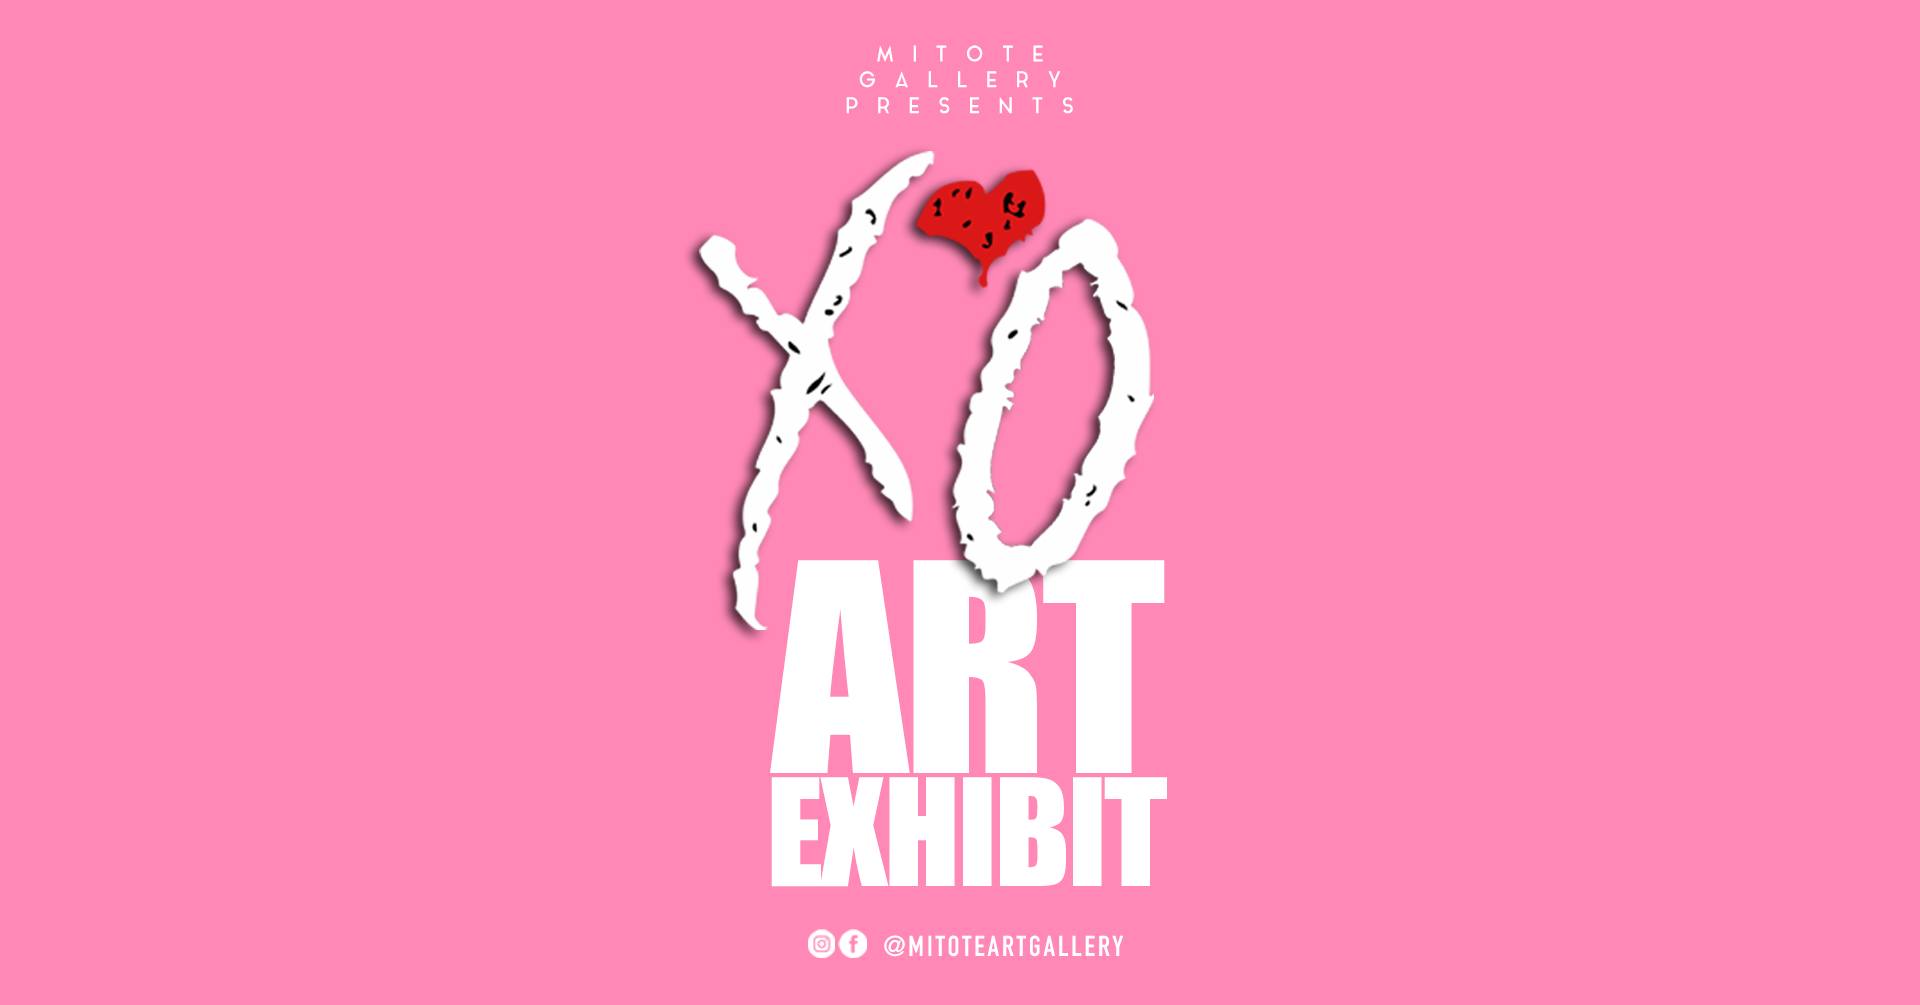 Mitote Gallery presents XO Art Exhibit